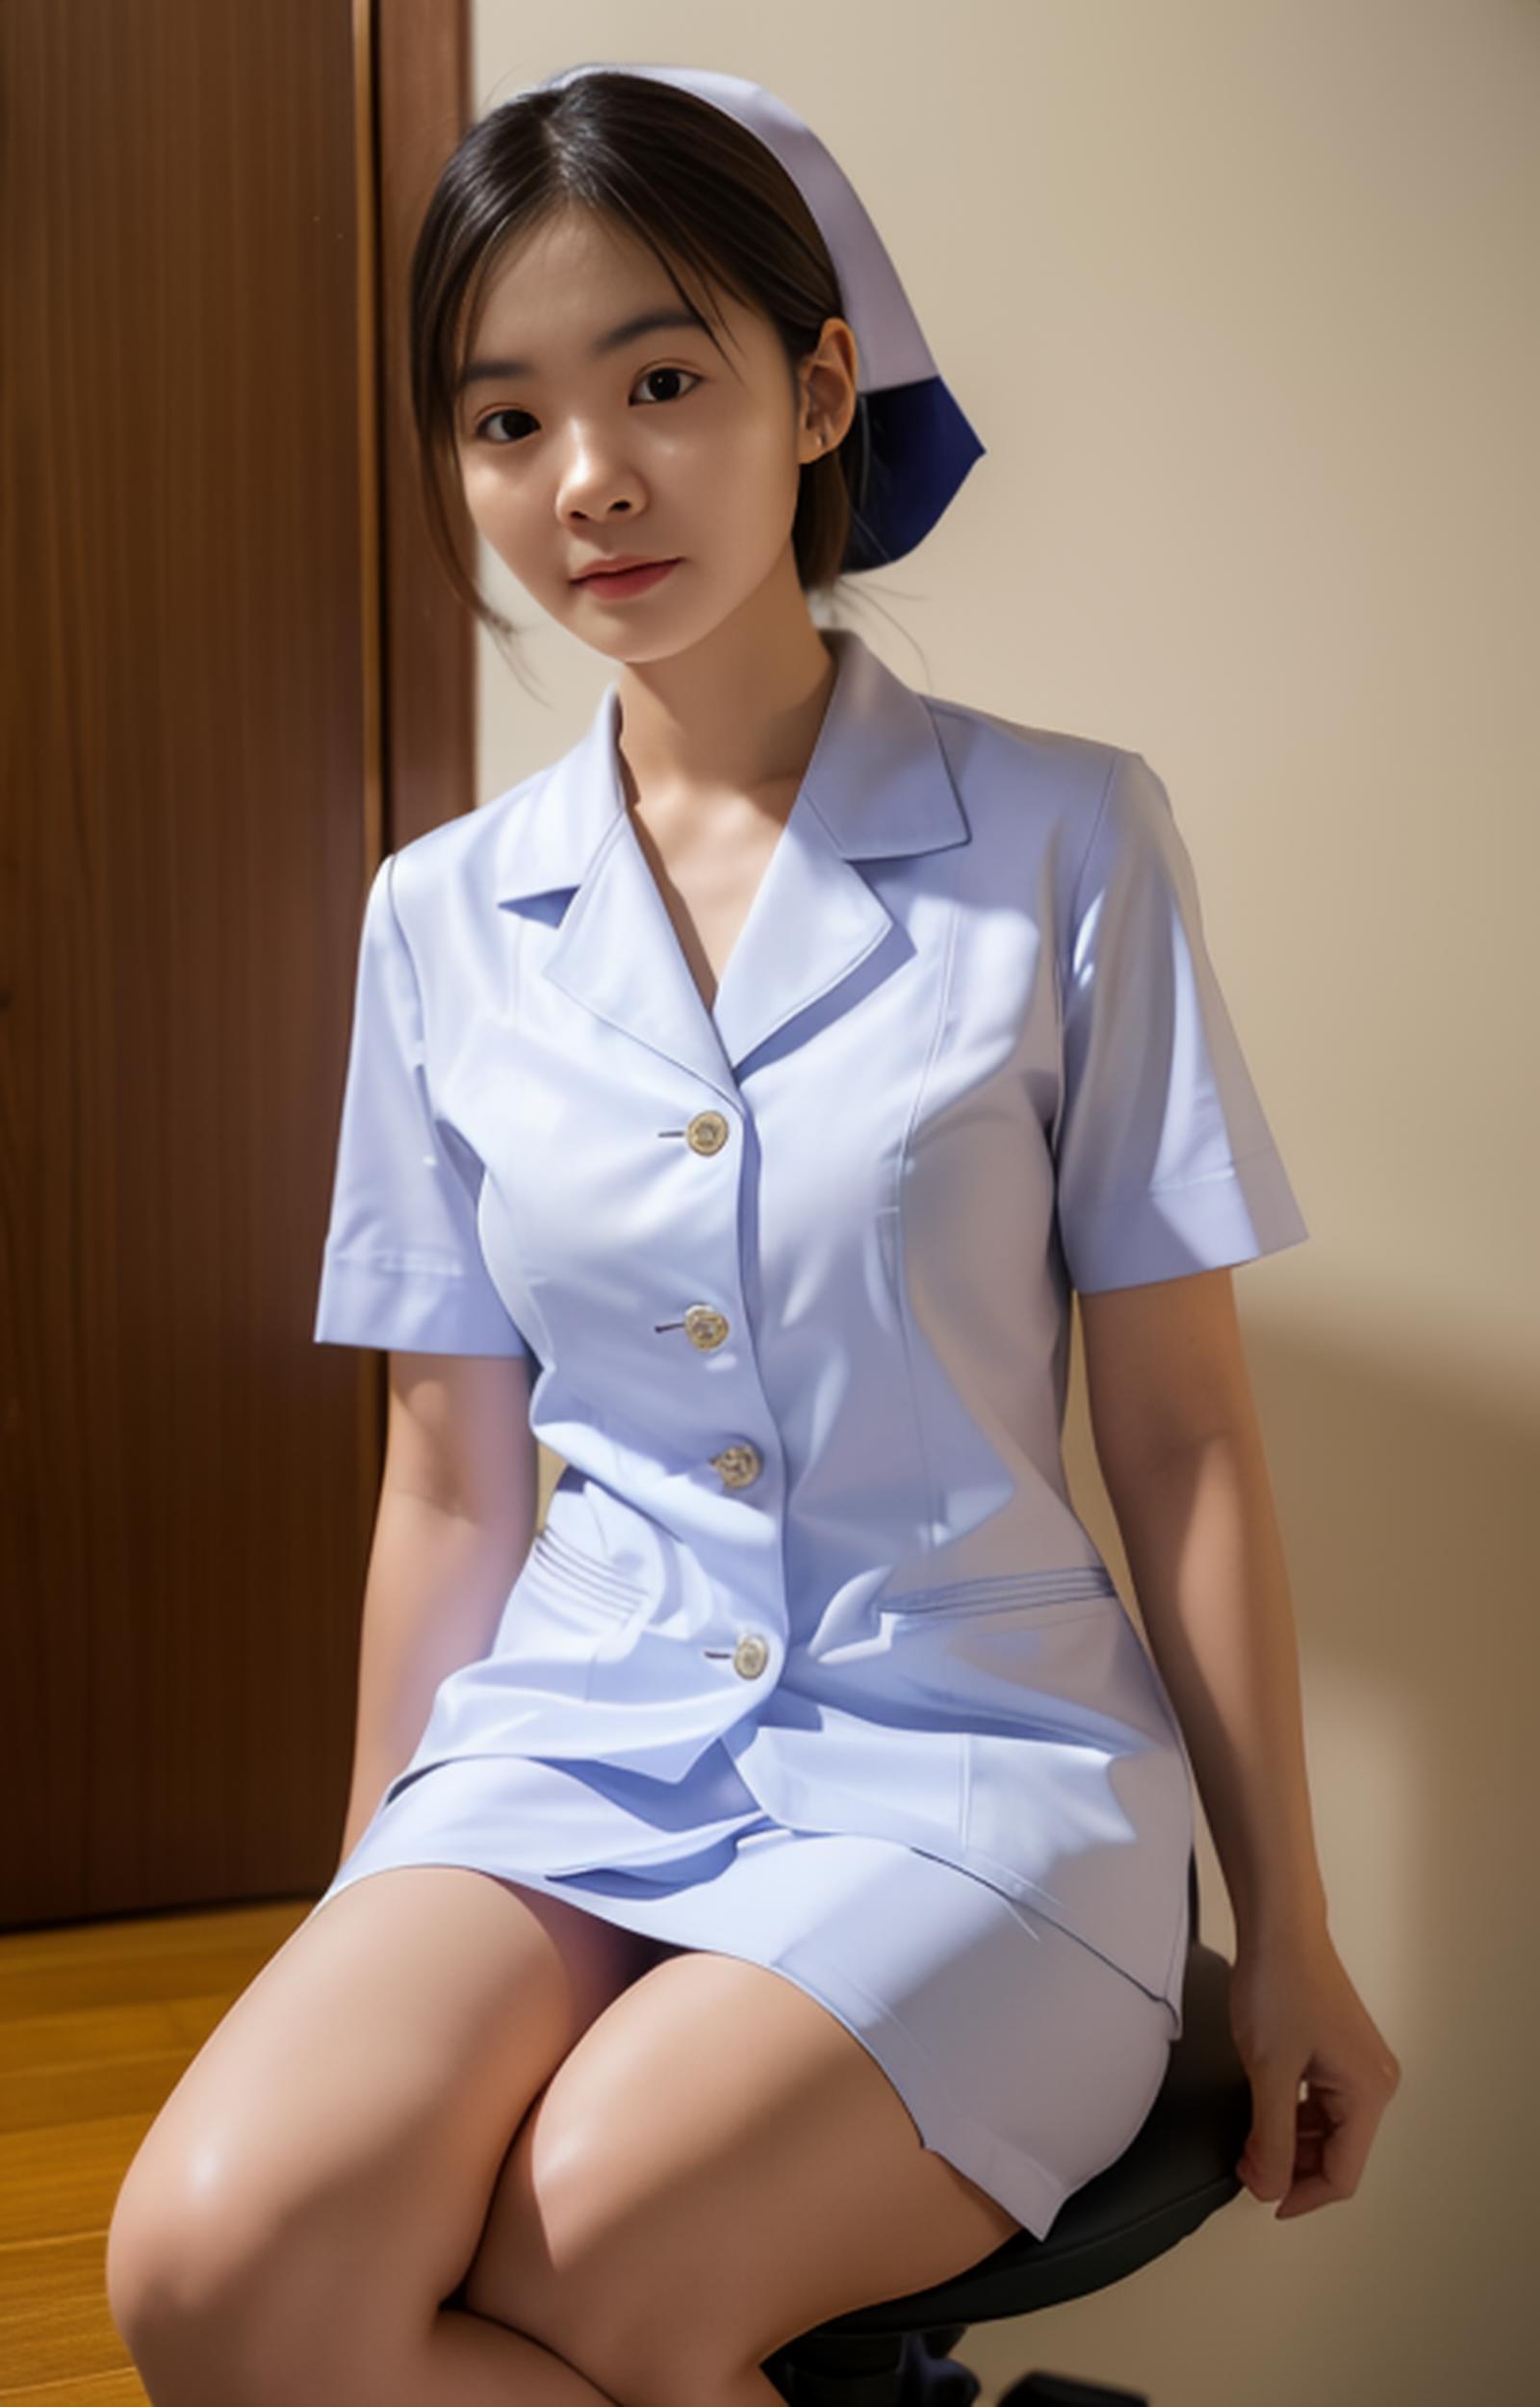 Thai Nurse  image by Toeichi